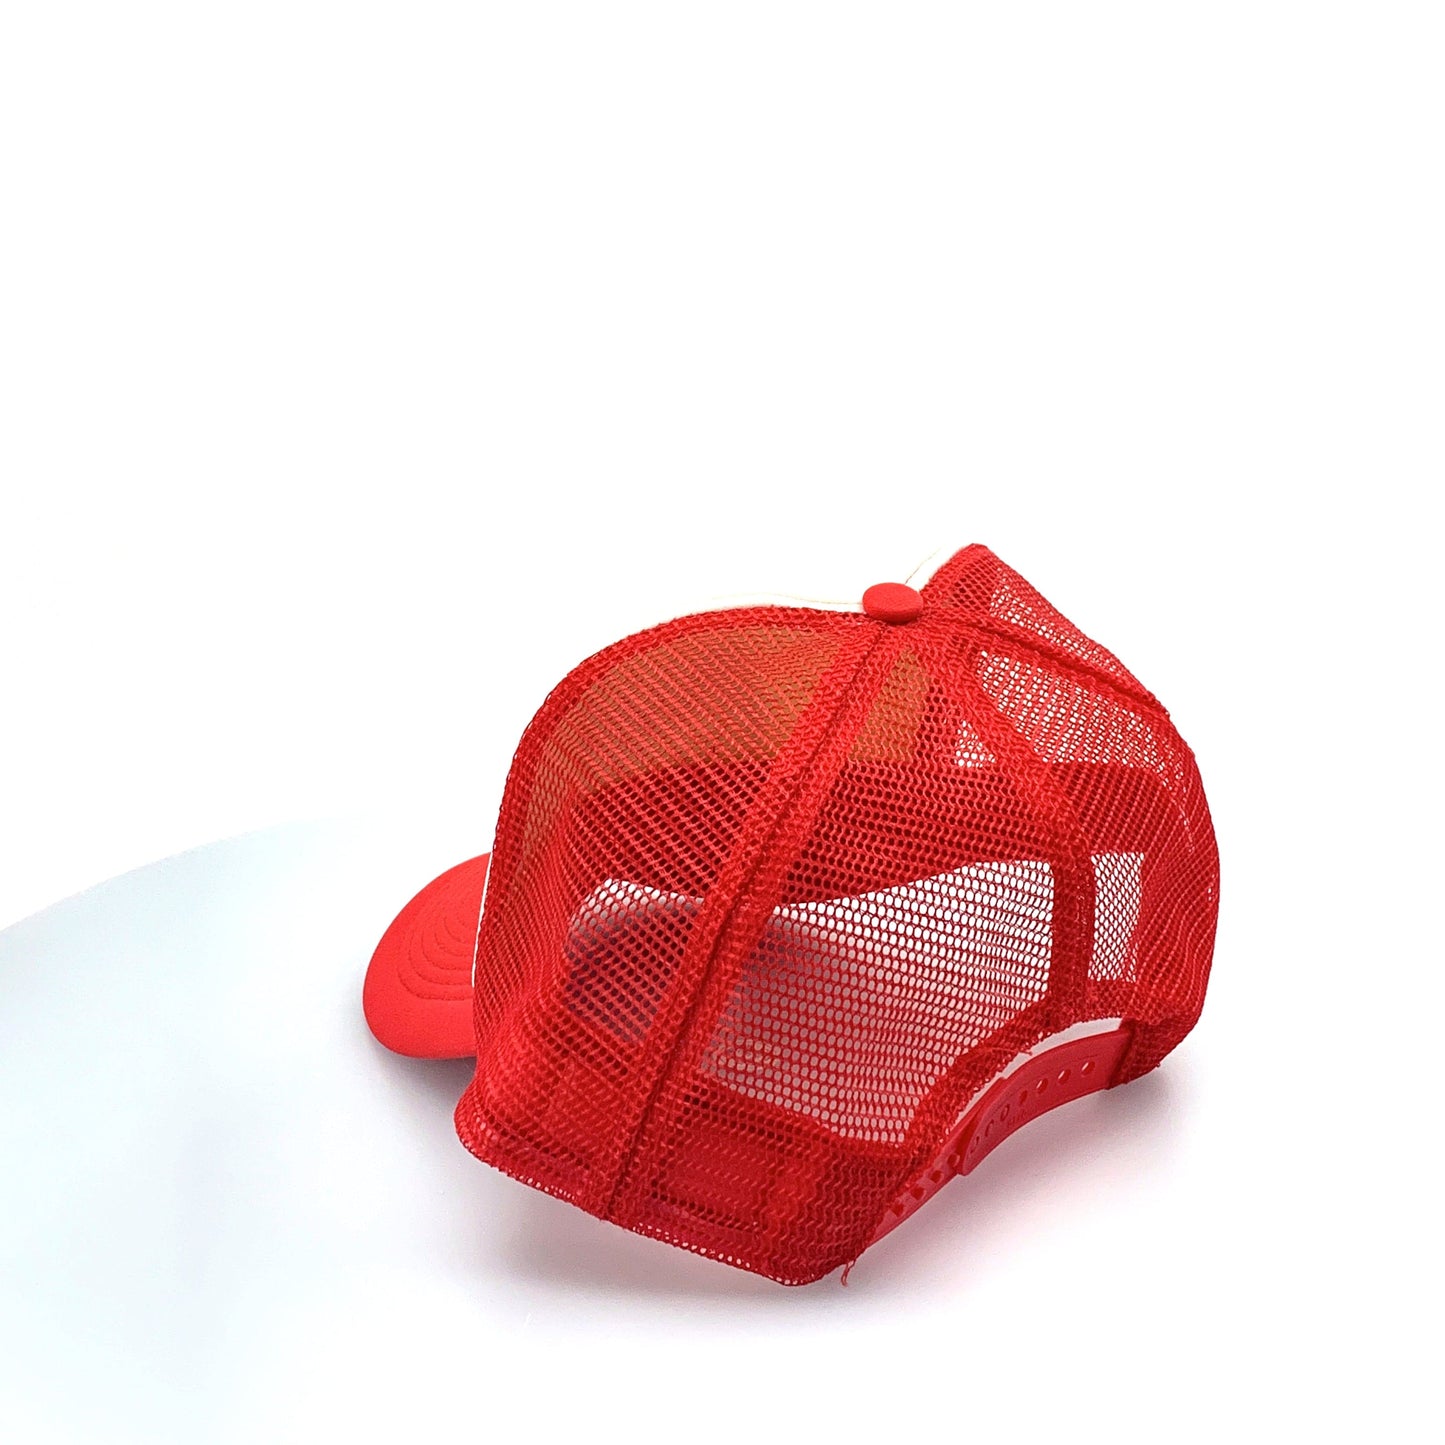 Otto Headwear A&W ANDREWS ASPHALT SnapBack Trucker Hat Red White - OSFM